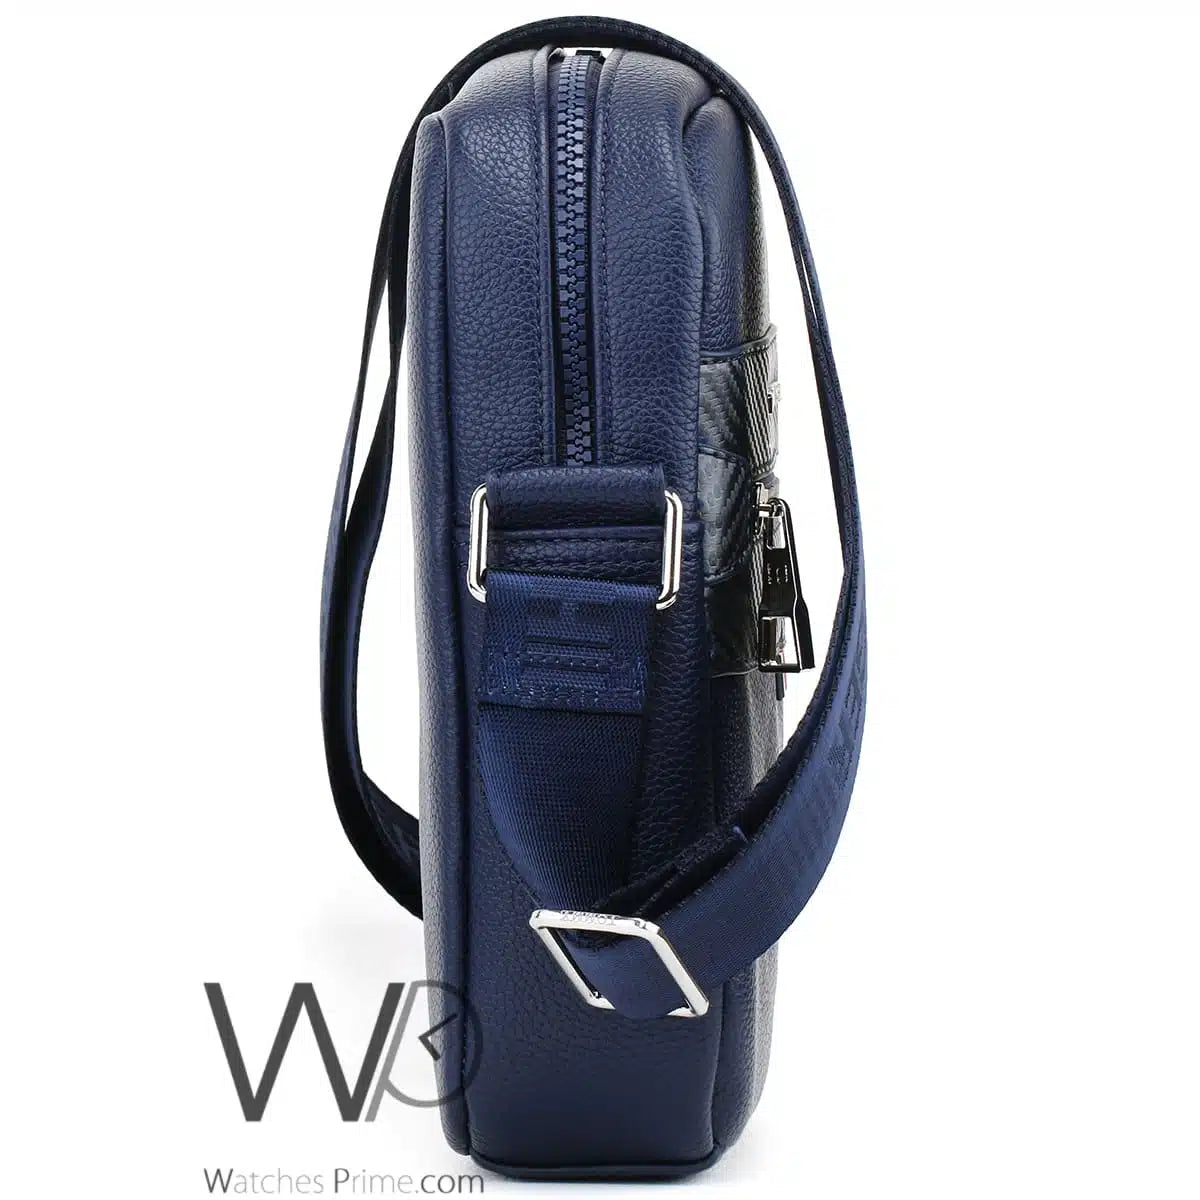 MOT TOM Navy Blue Colour Unisex Genuine Leather Side Sling Bag 987543